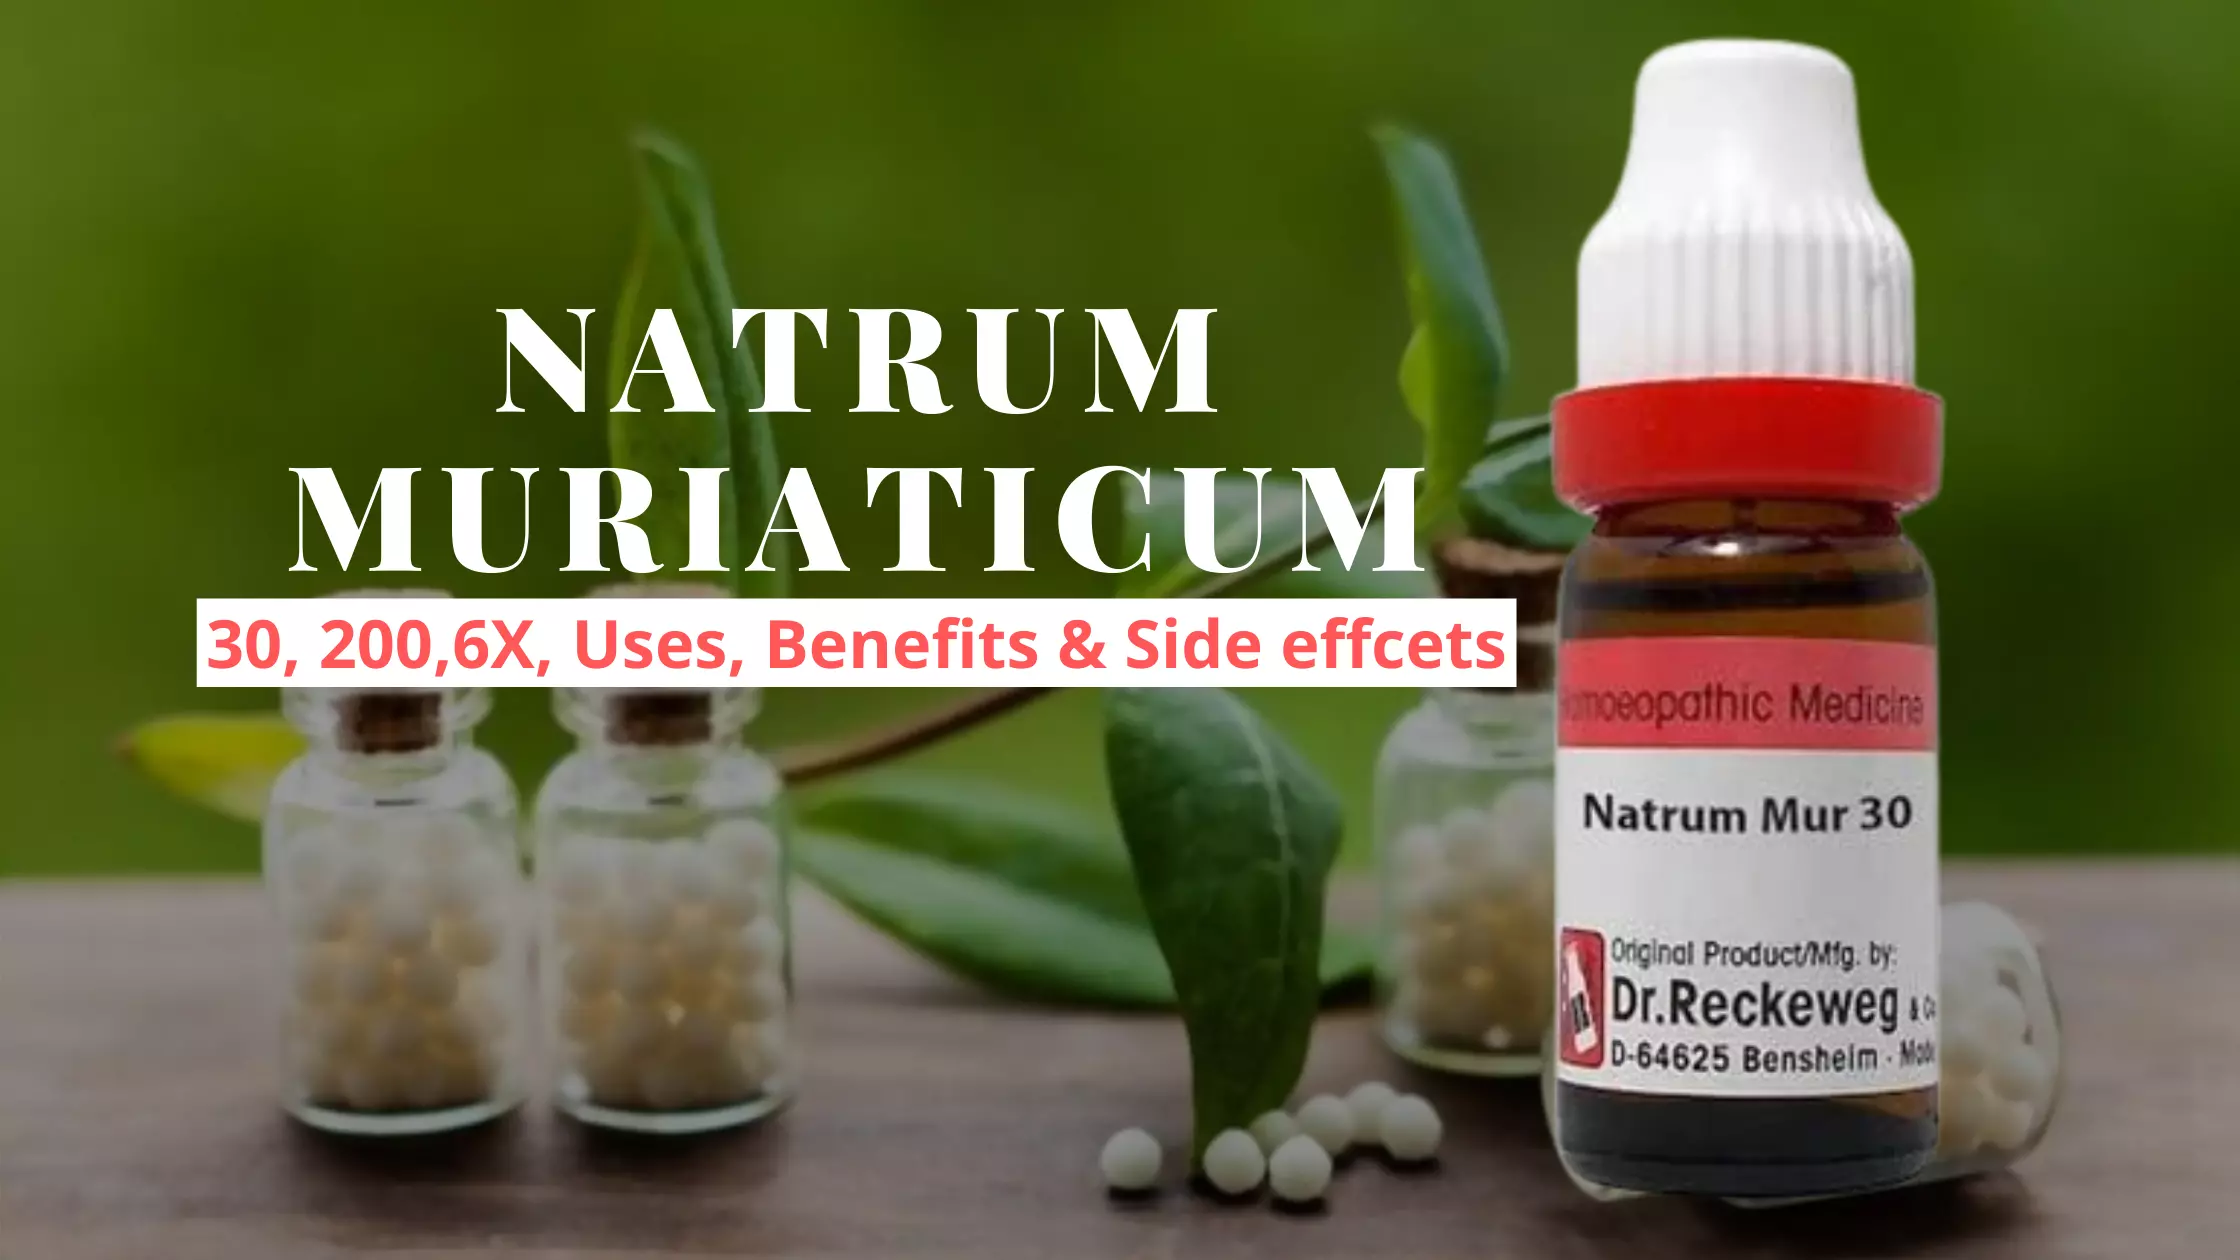 Natrum Muriaticum 30, 200, 6x Uses, Dosage, Benefits Side Effects